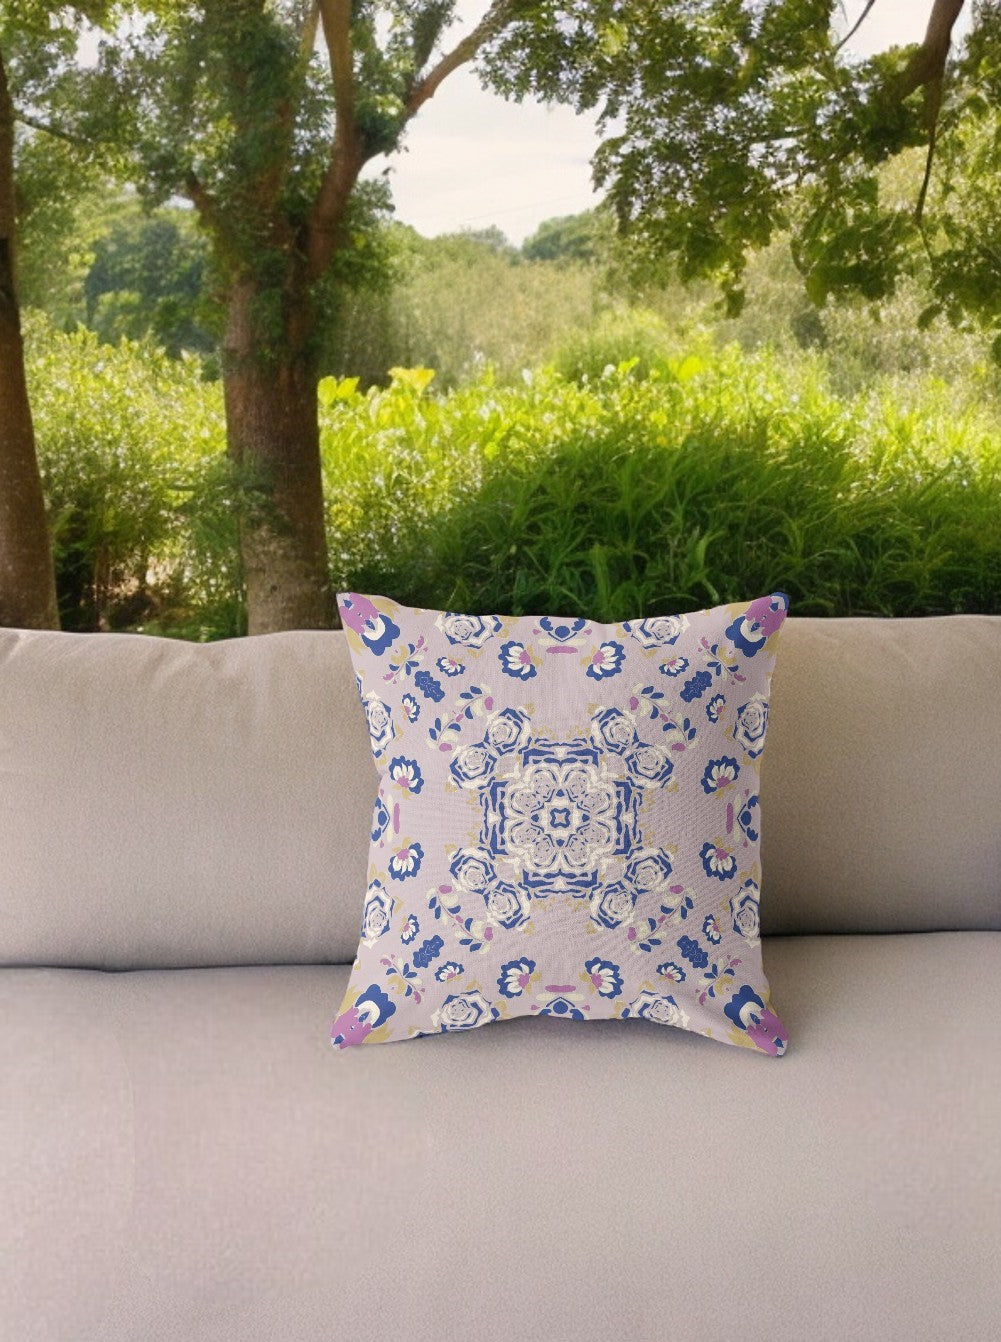 18” Lavender Blue Wreath Indoor Outdoor Zippered Throw Pillow